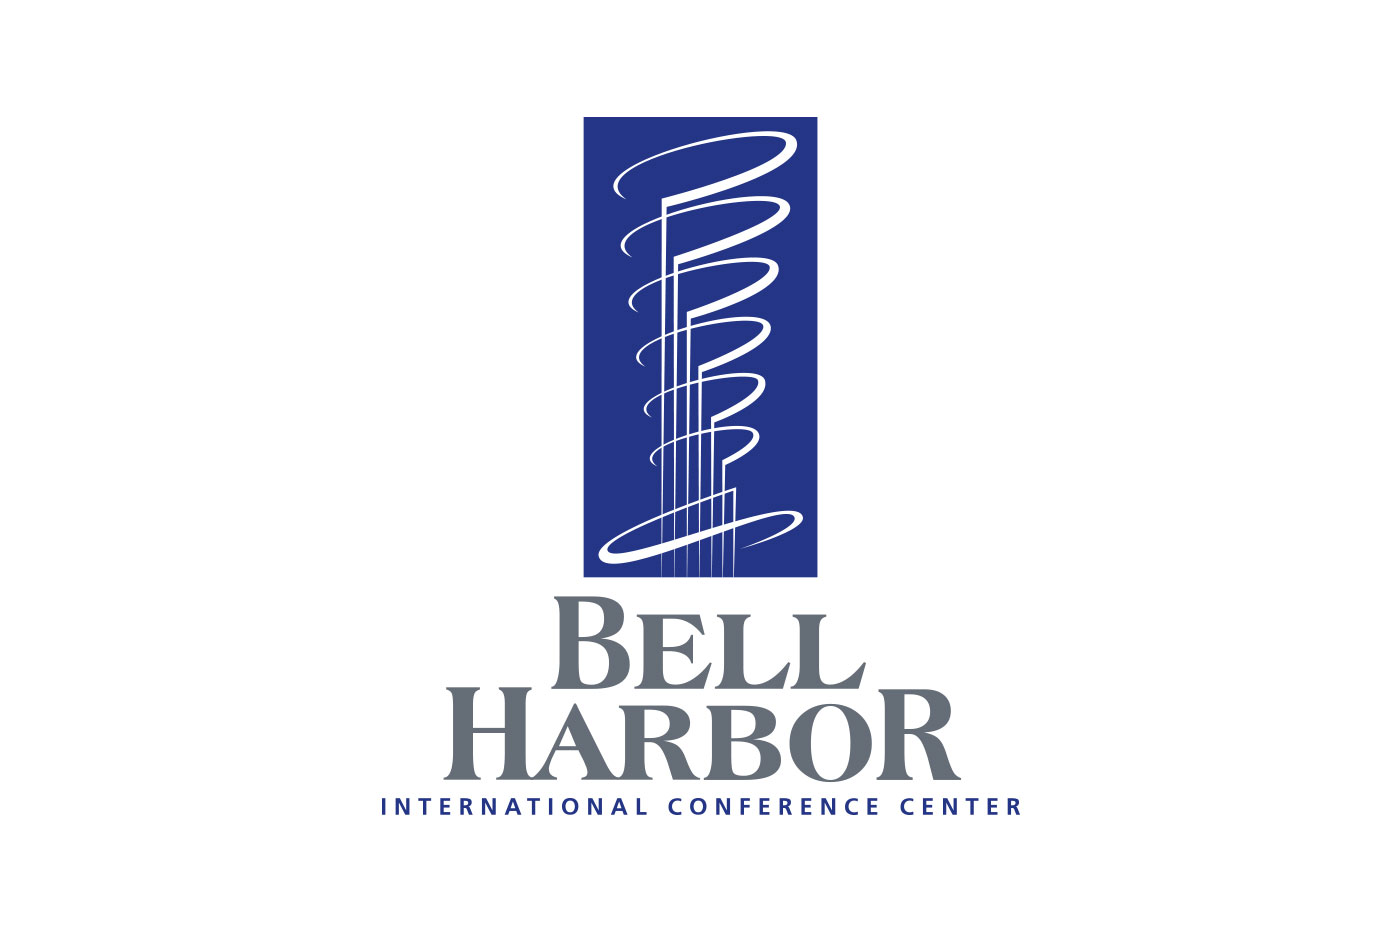 Bell Harbor International Conference Center